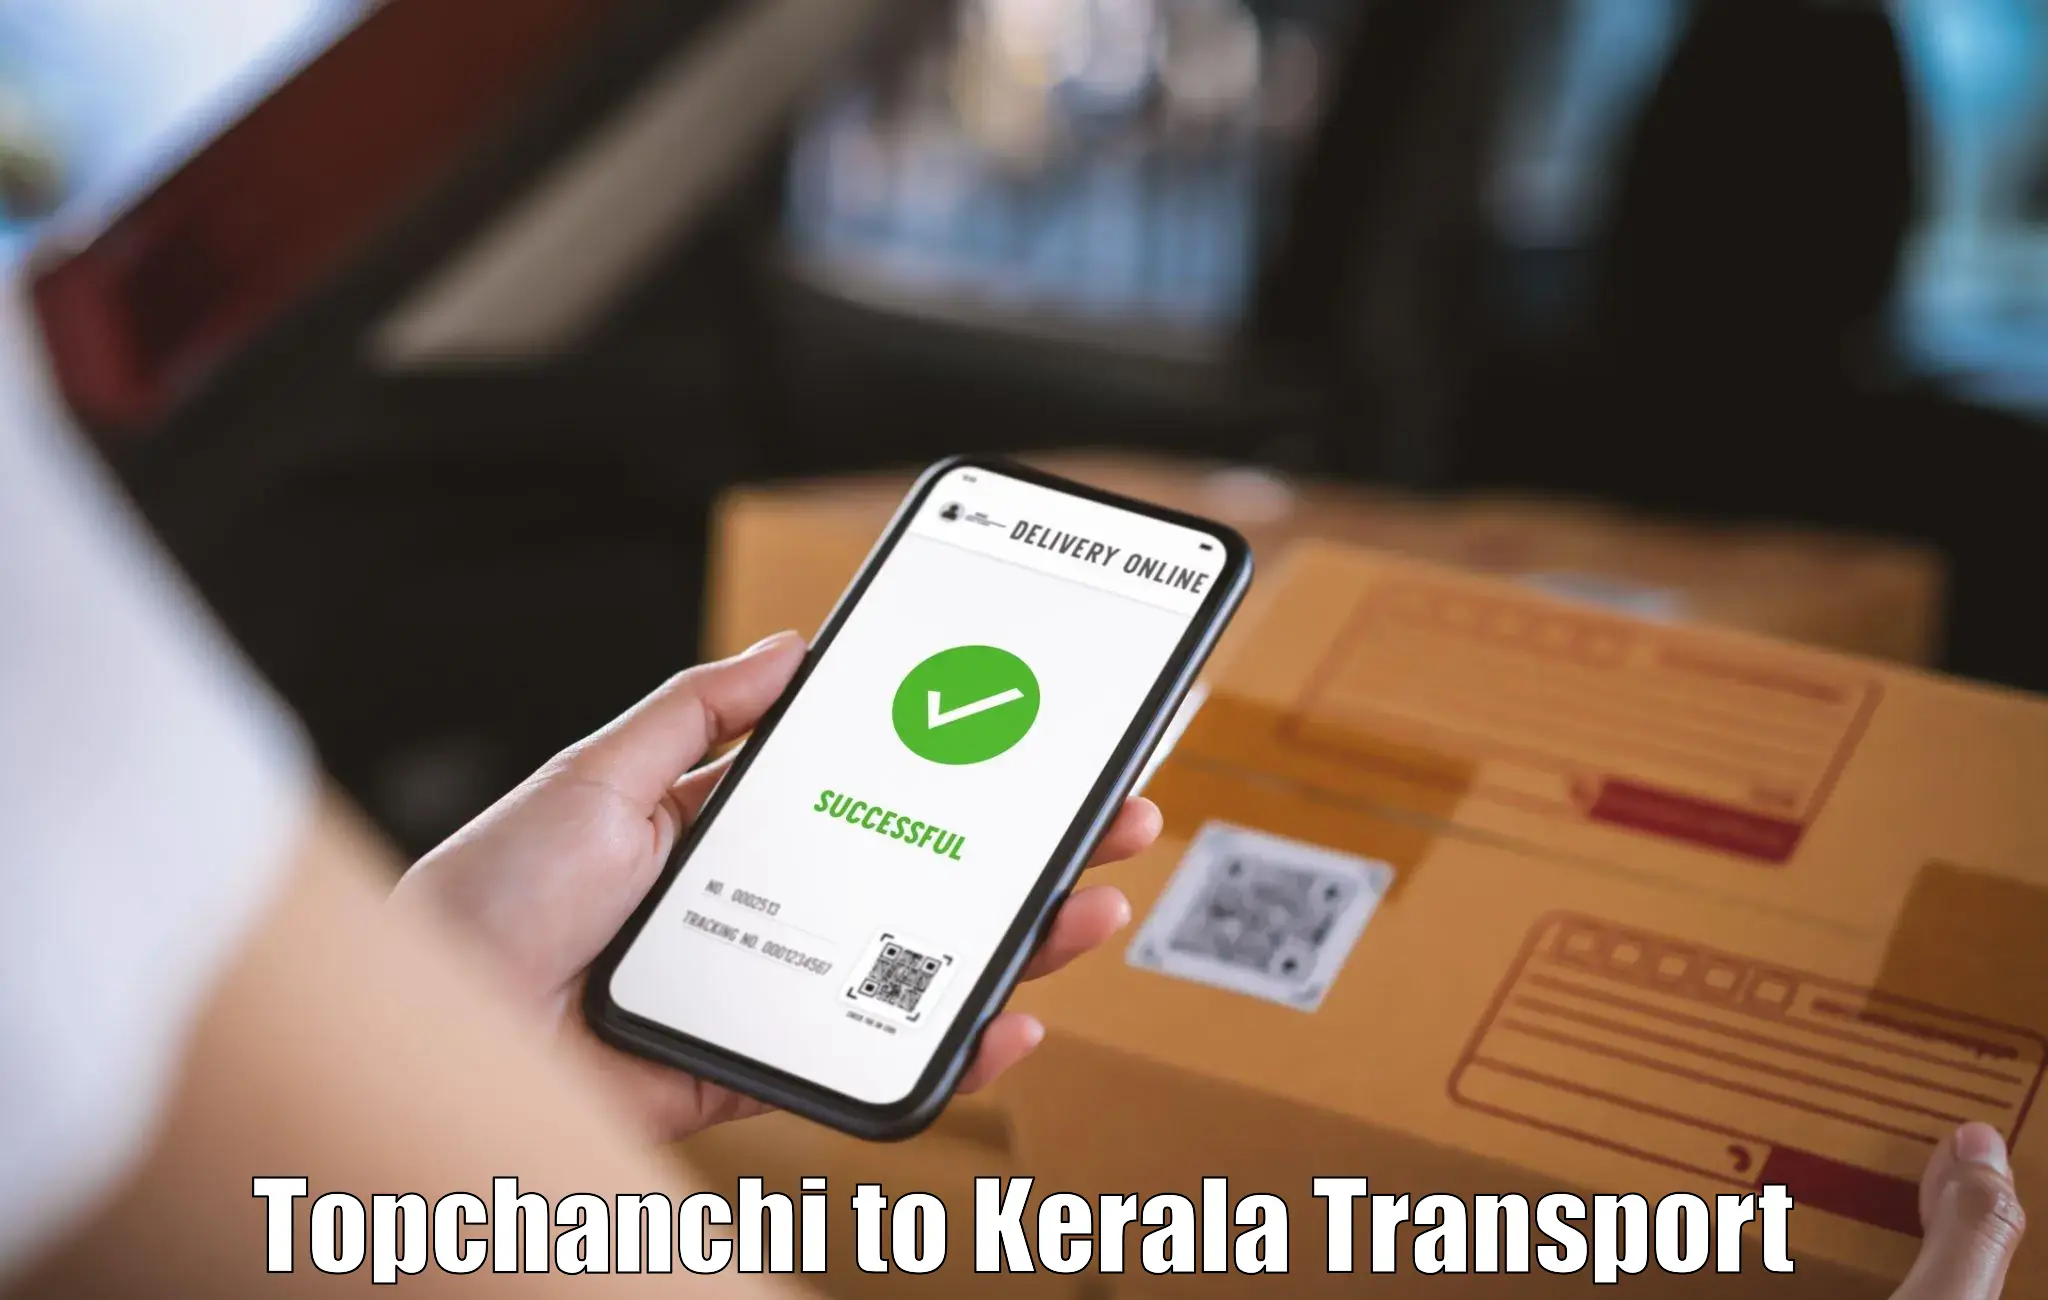 Air freight transport services Topchanchi to Kattappana